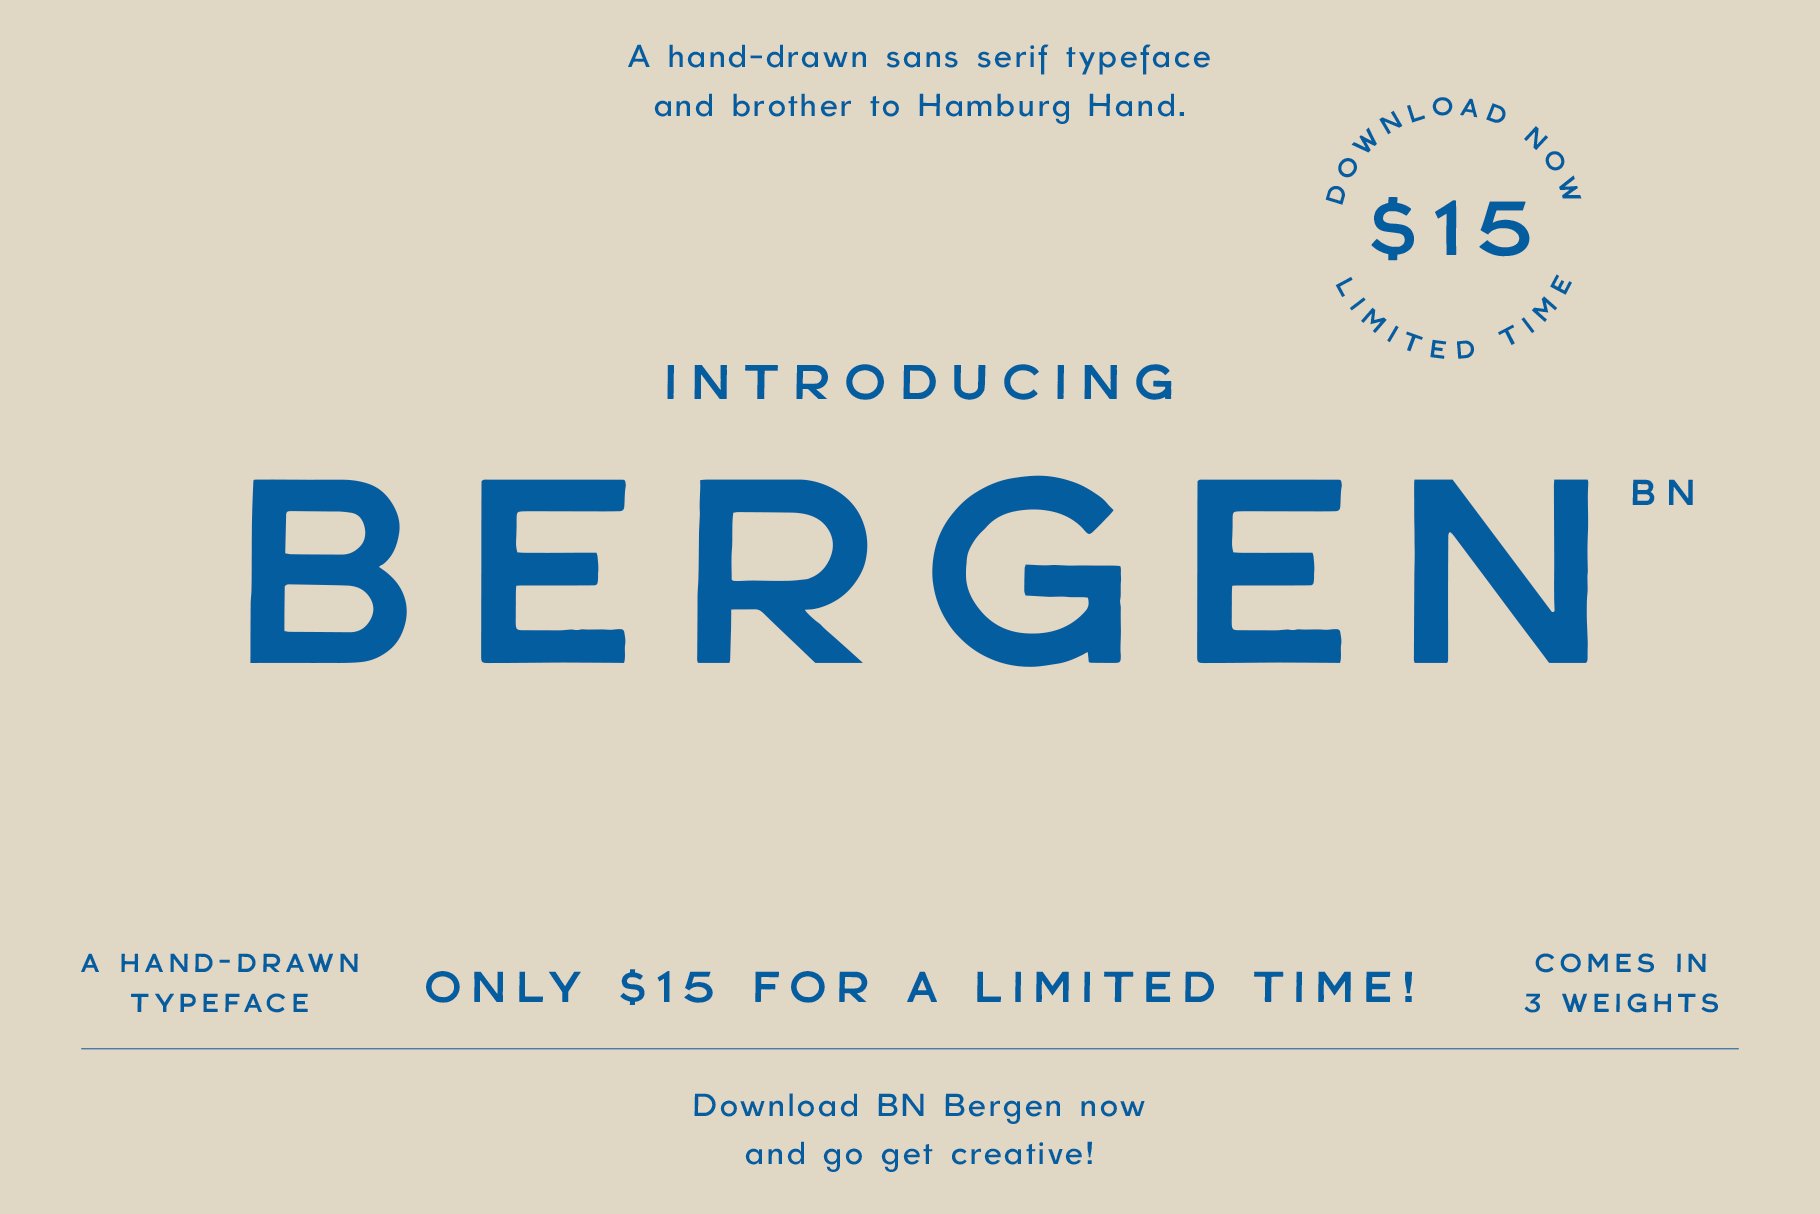 BN Bergen cover image.